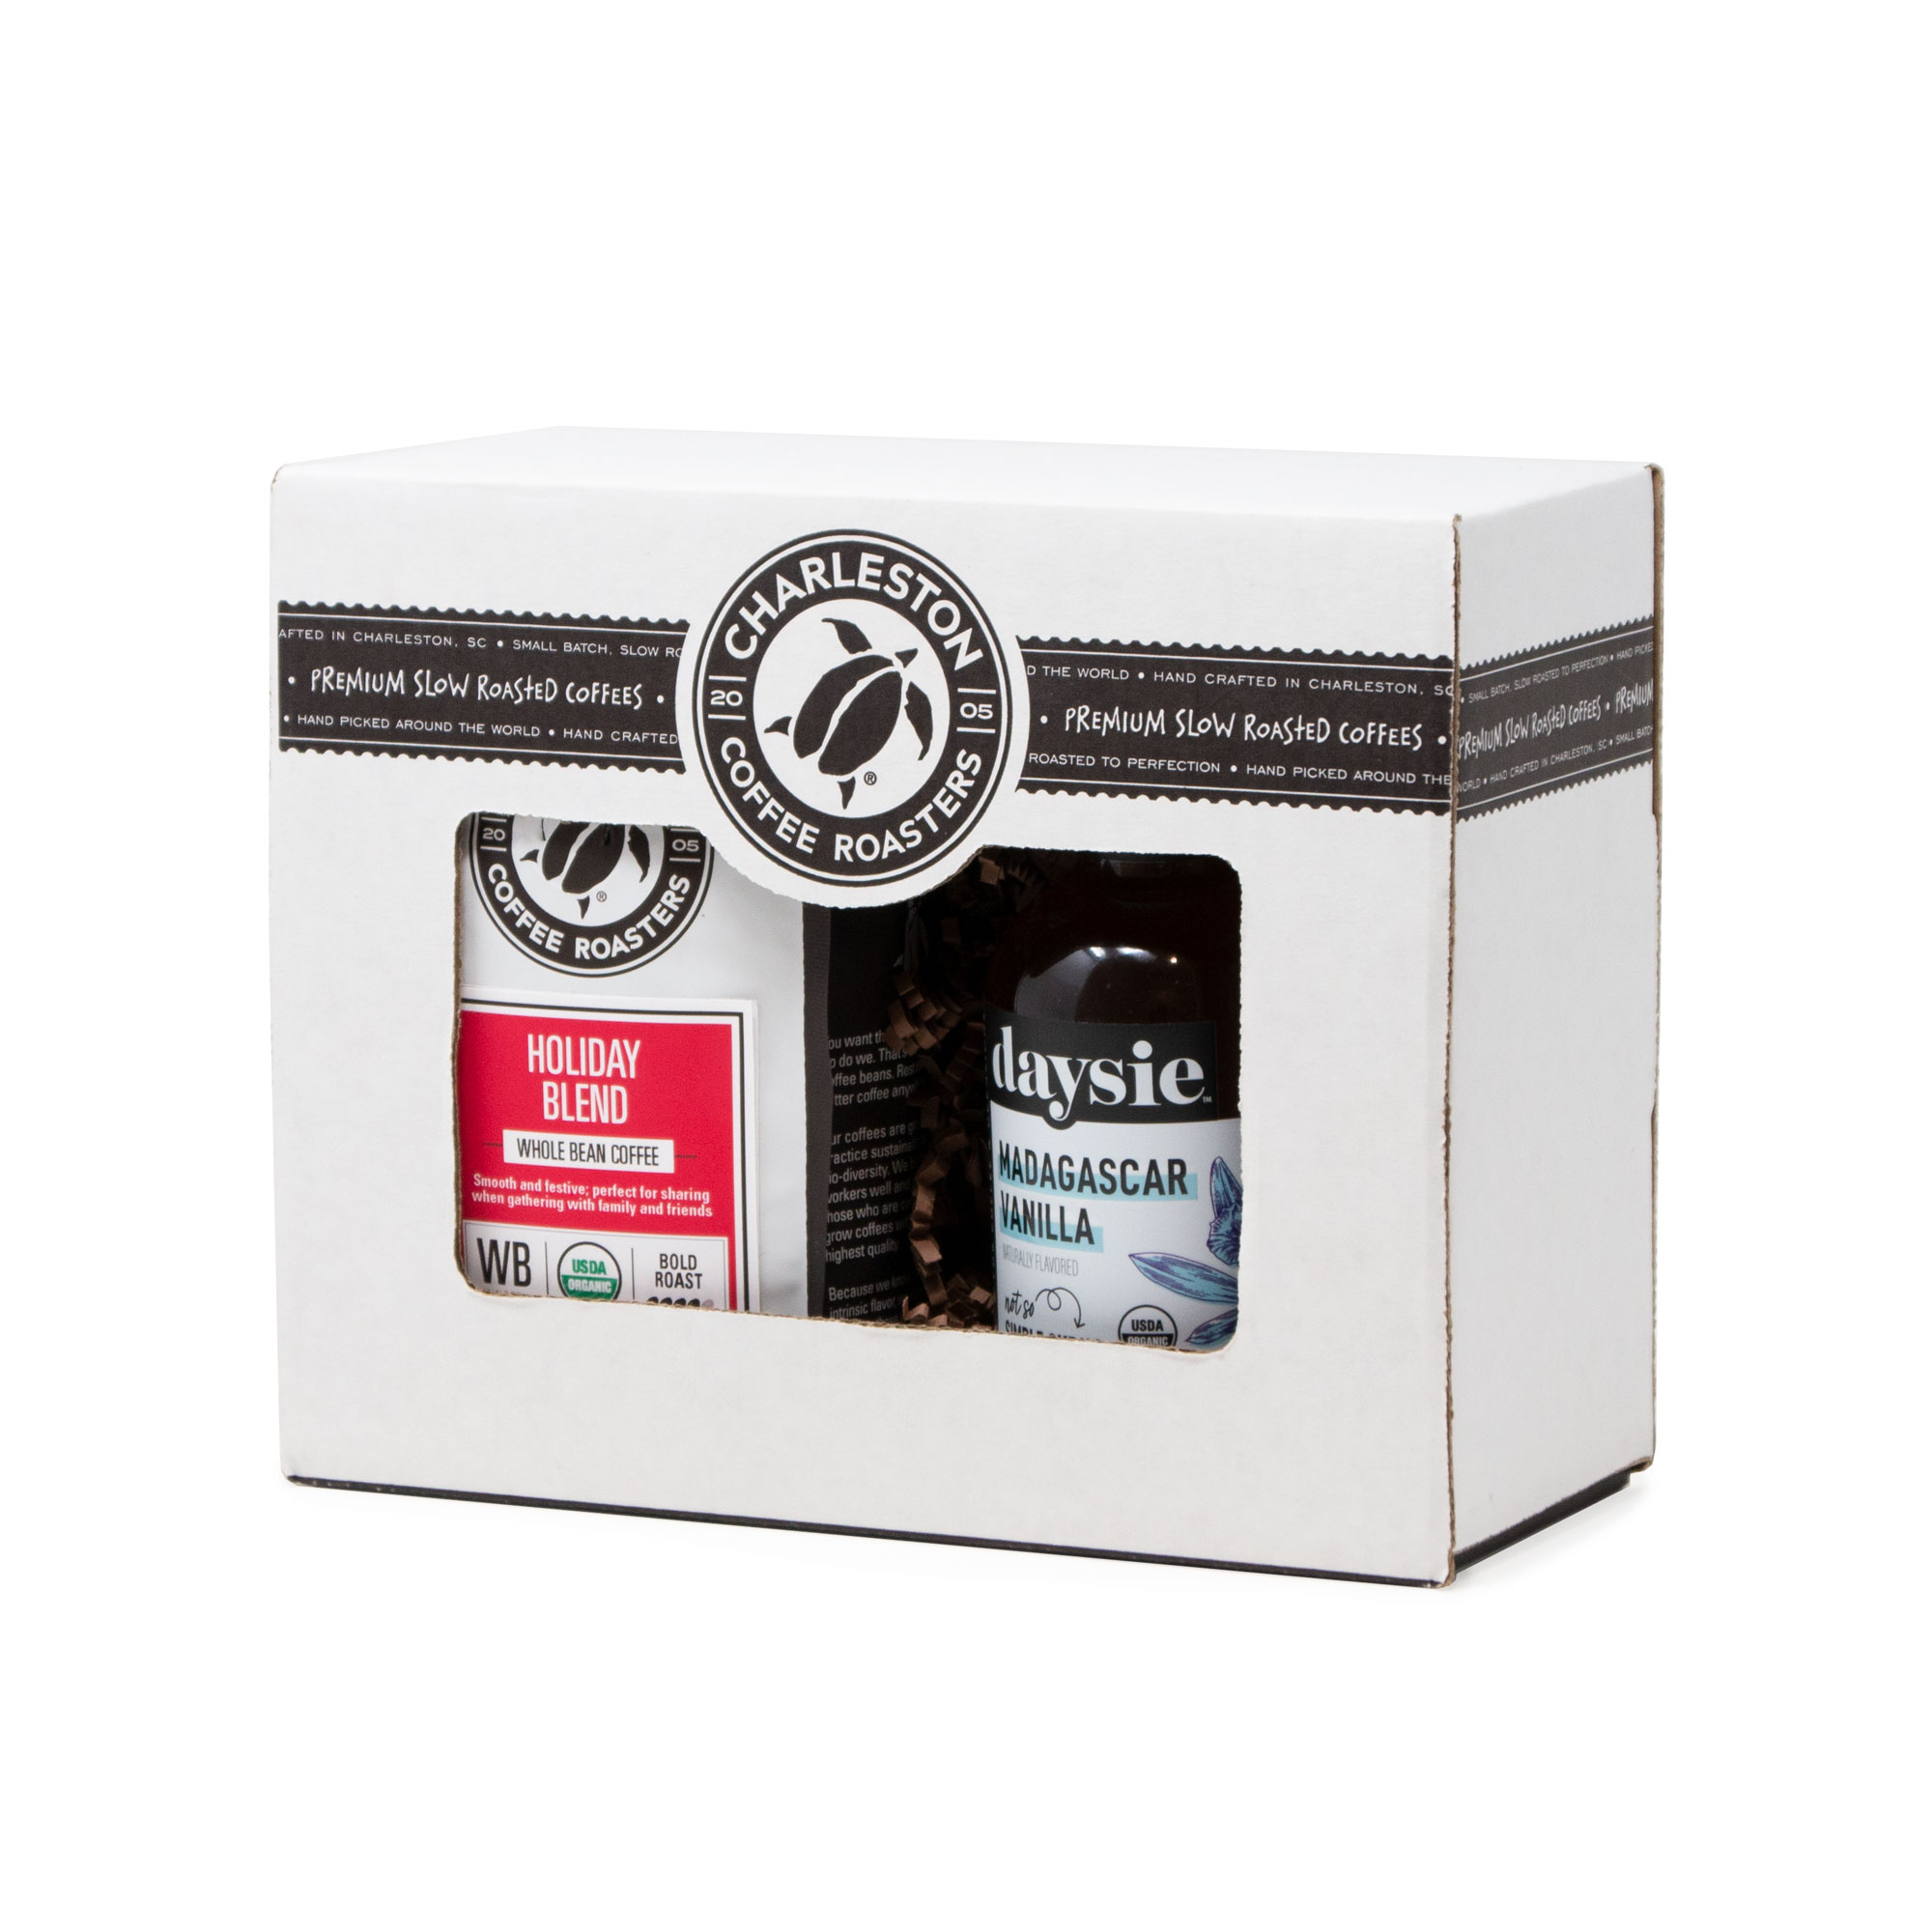 Charleston Coffee Roasters Holiday Blend + Daysie Vanilla Syrup Gift Set